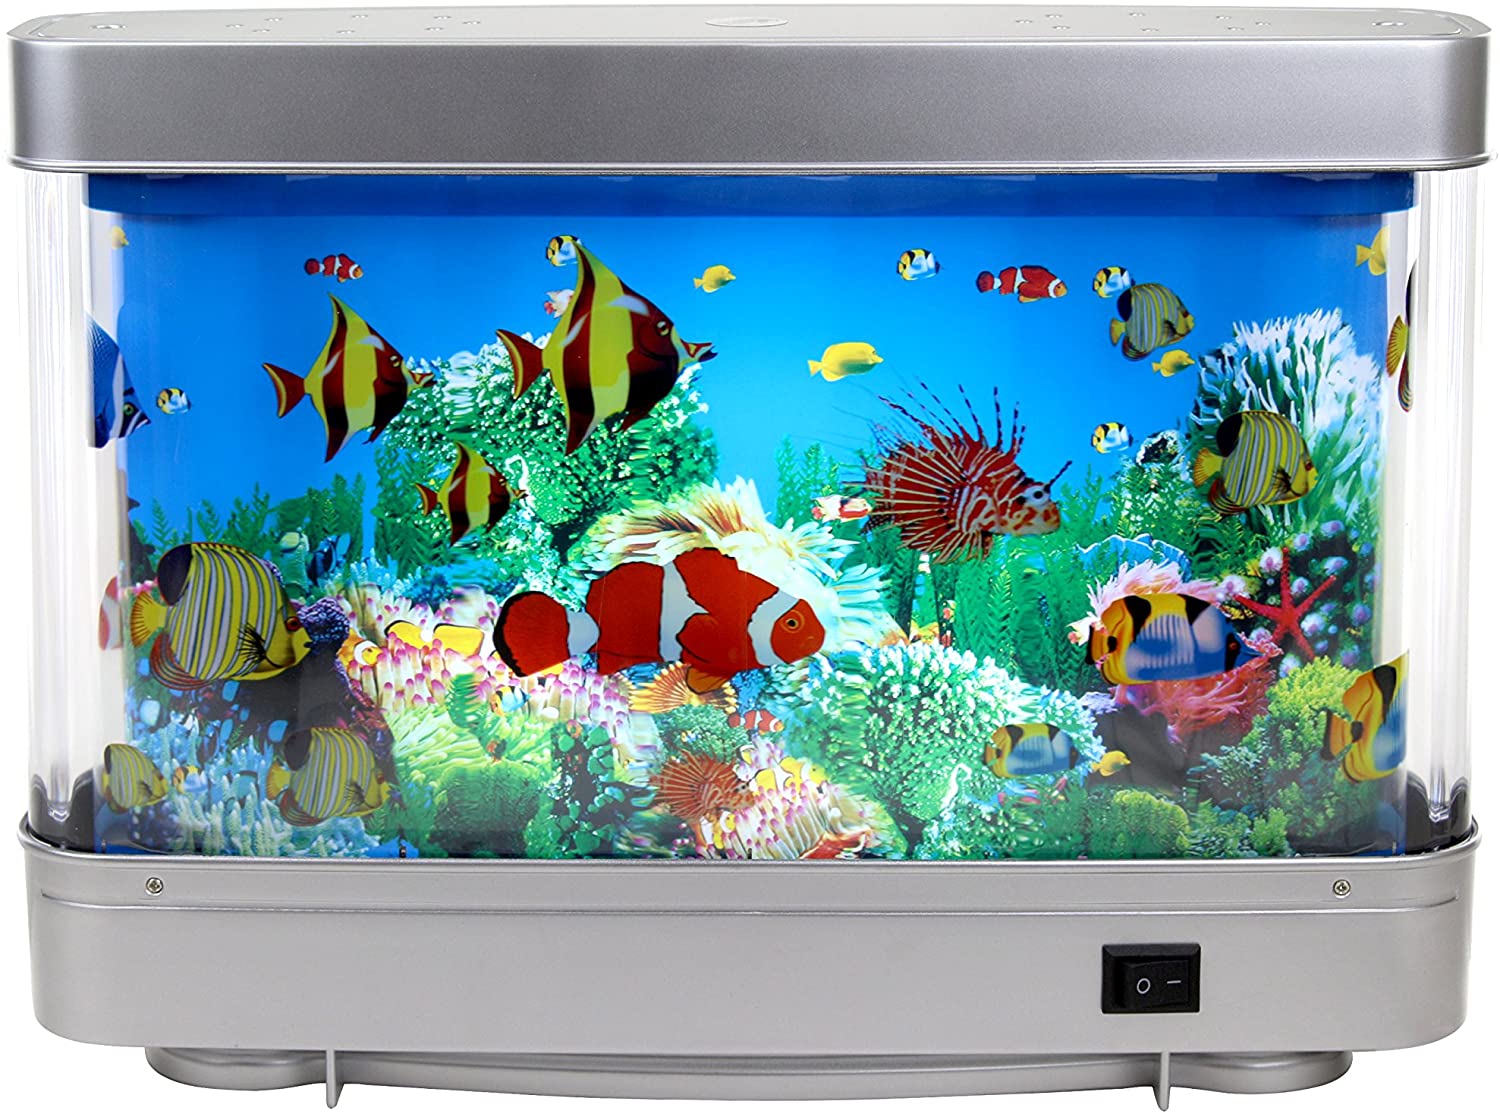 Review of Lightahead Artificial Tropical Fish Aquarium Decorative Lamp Virtual Ocean in Motion